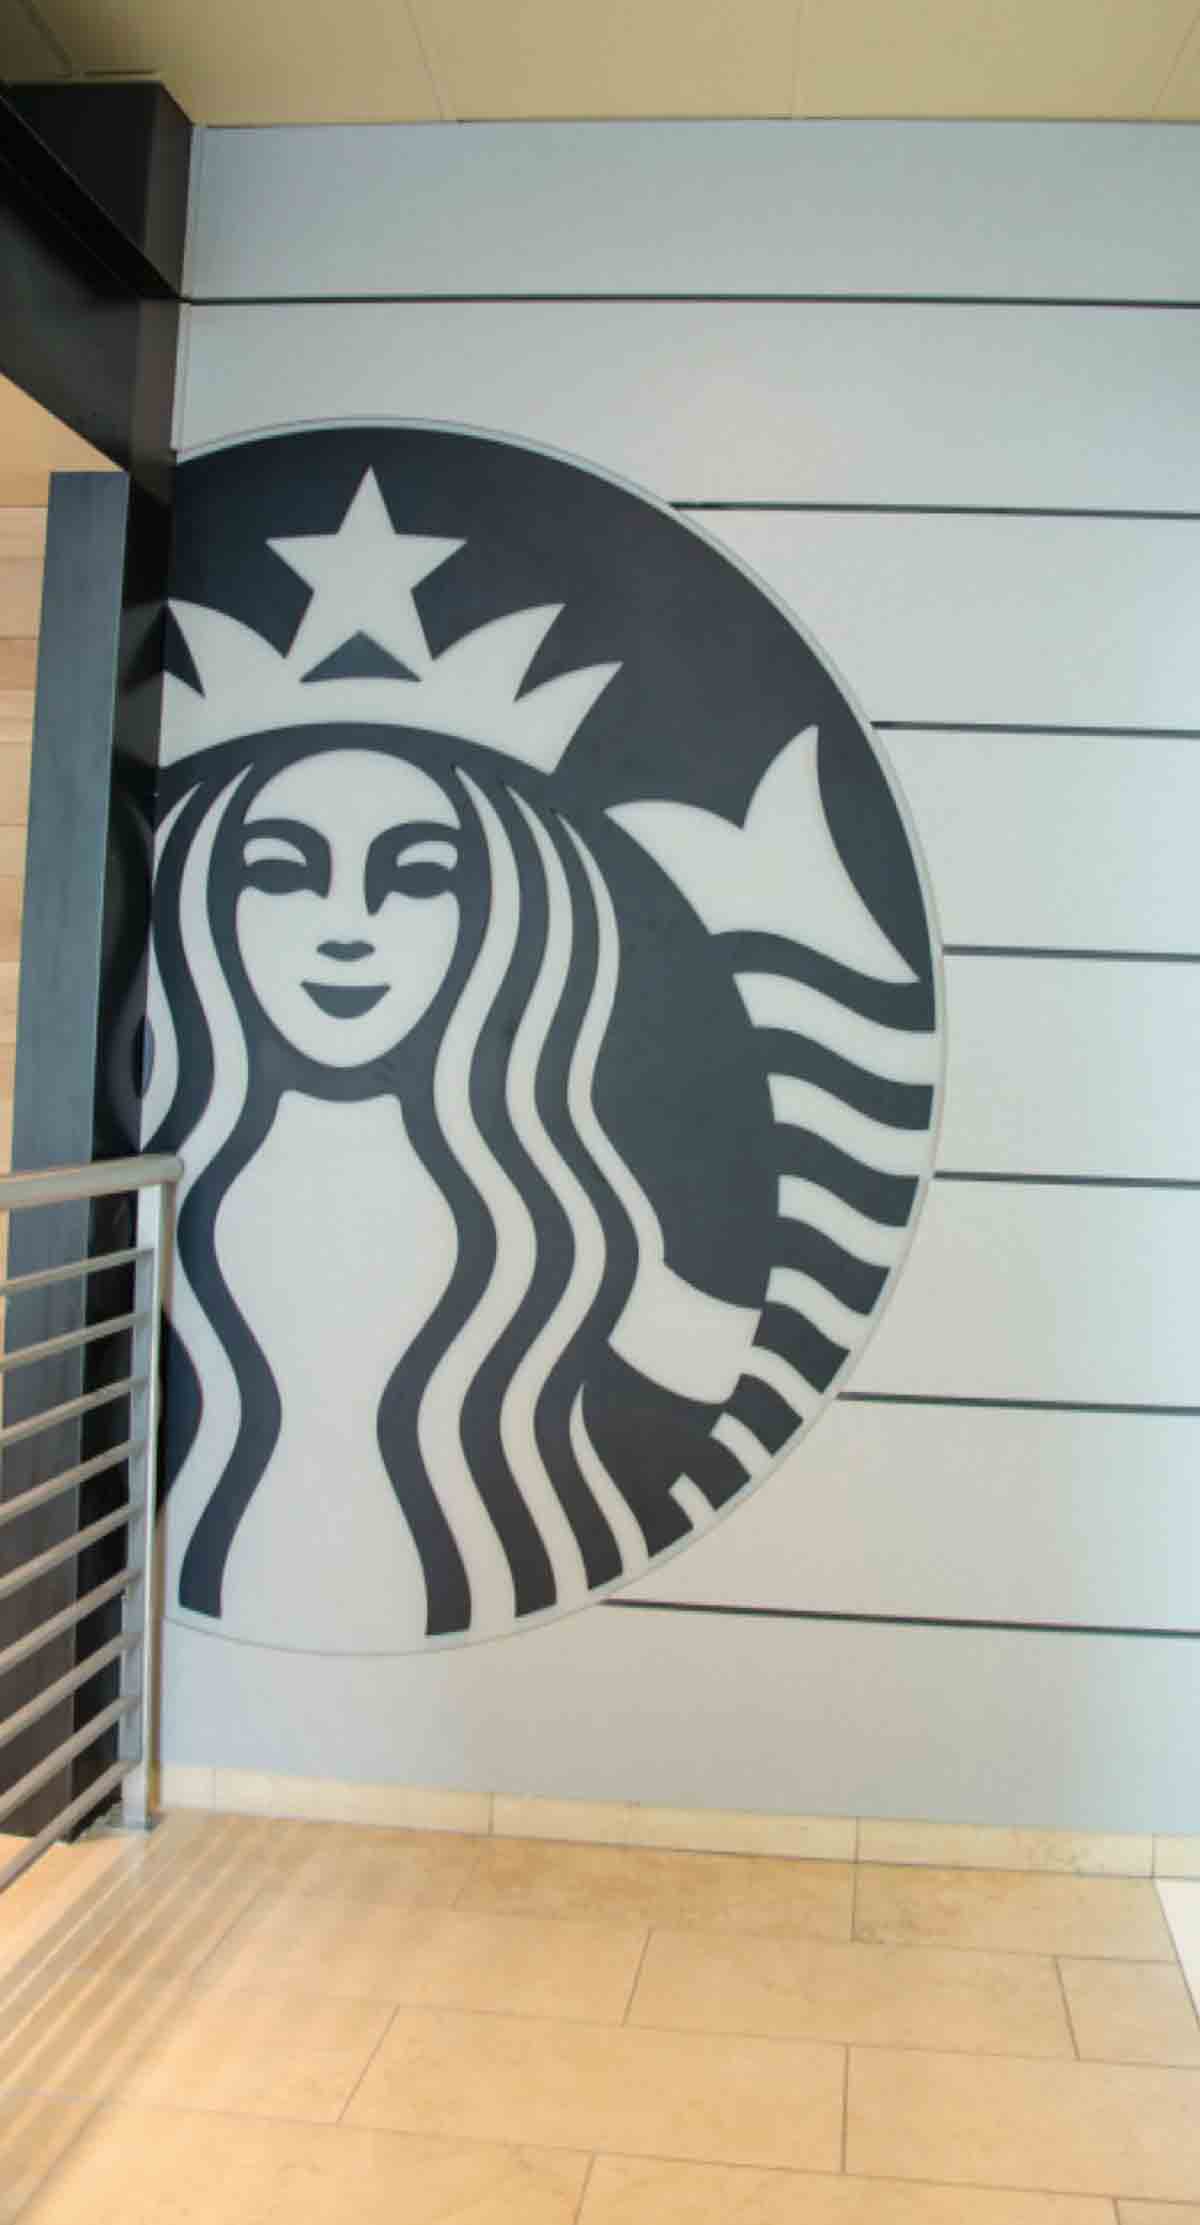 Starbucks Coffee logo made of vinyl